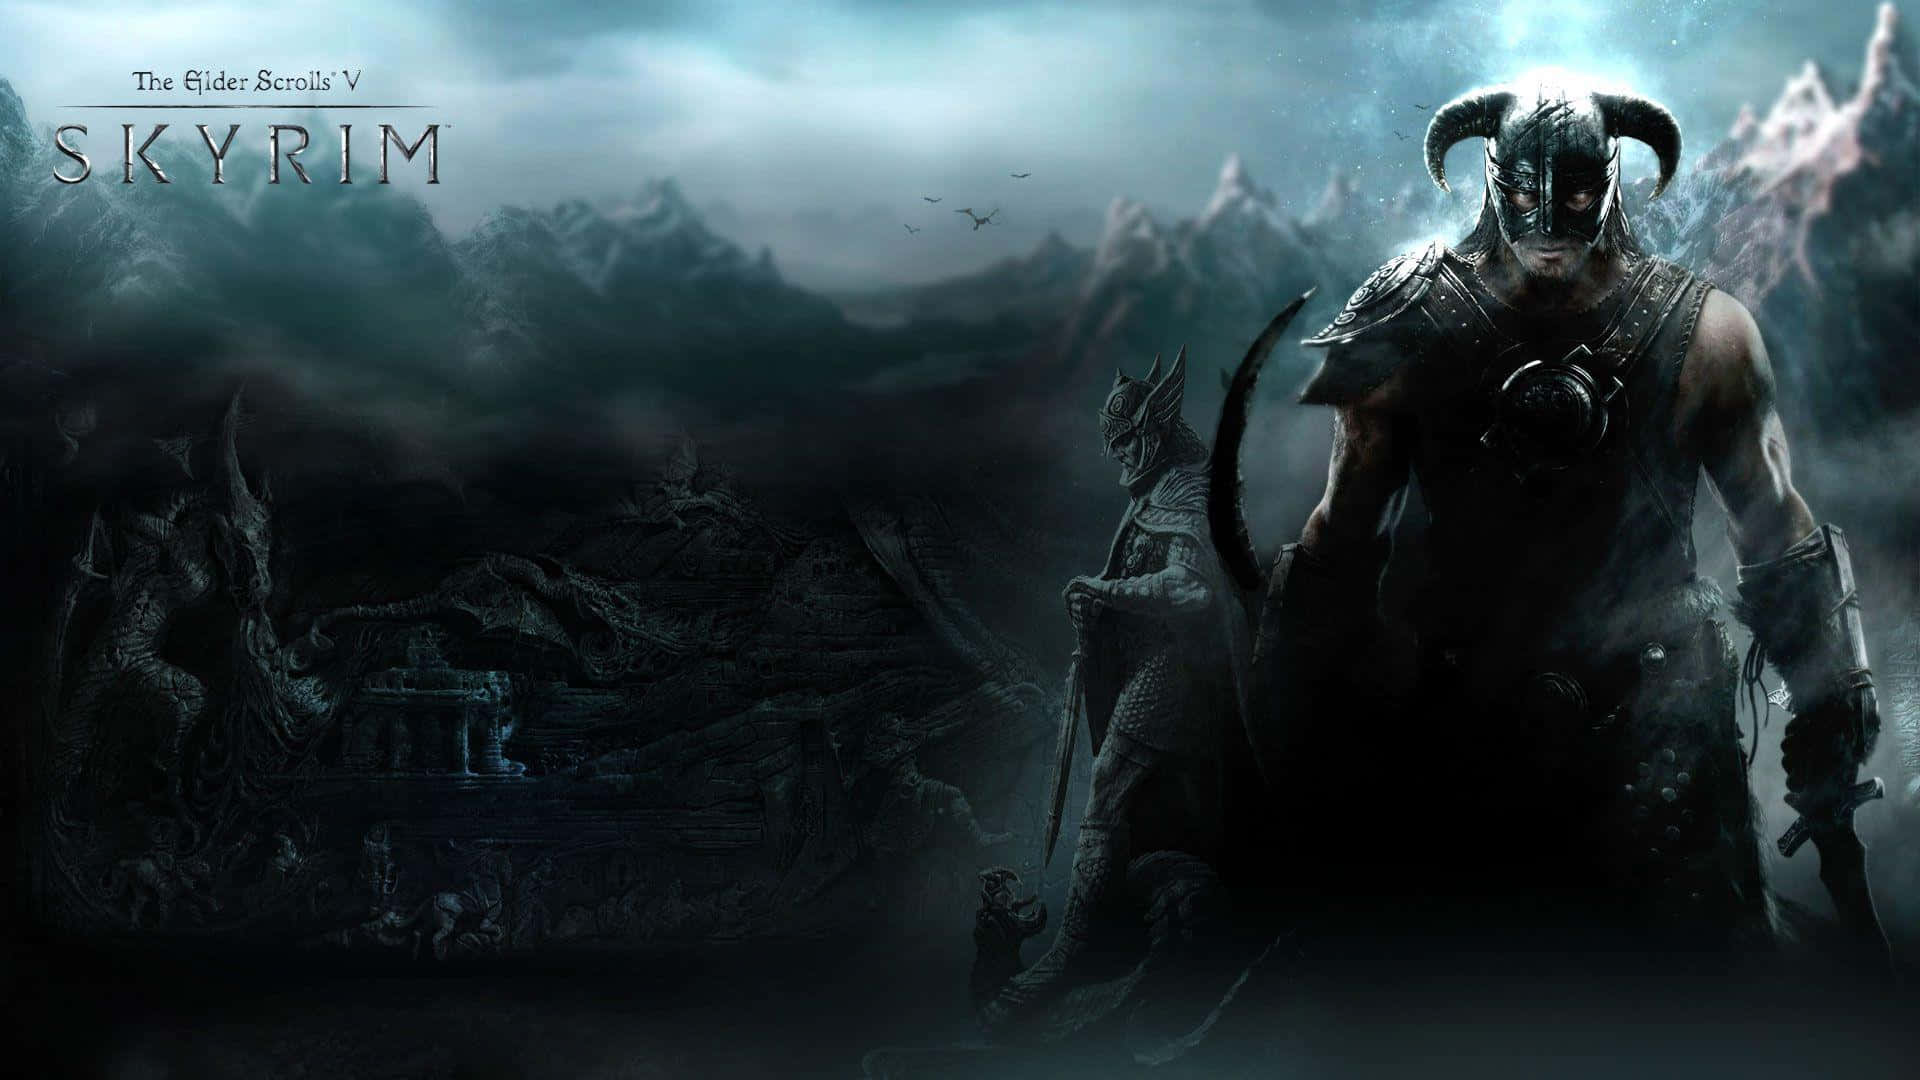 The Elder Scrolls V: Skyrim - Majestic Scenery